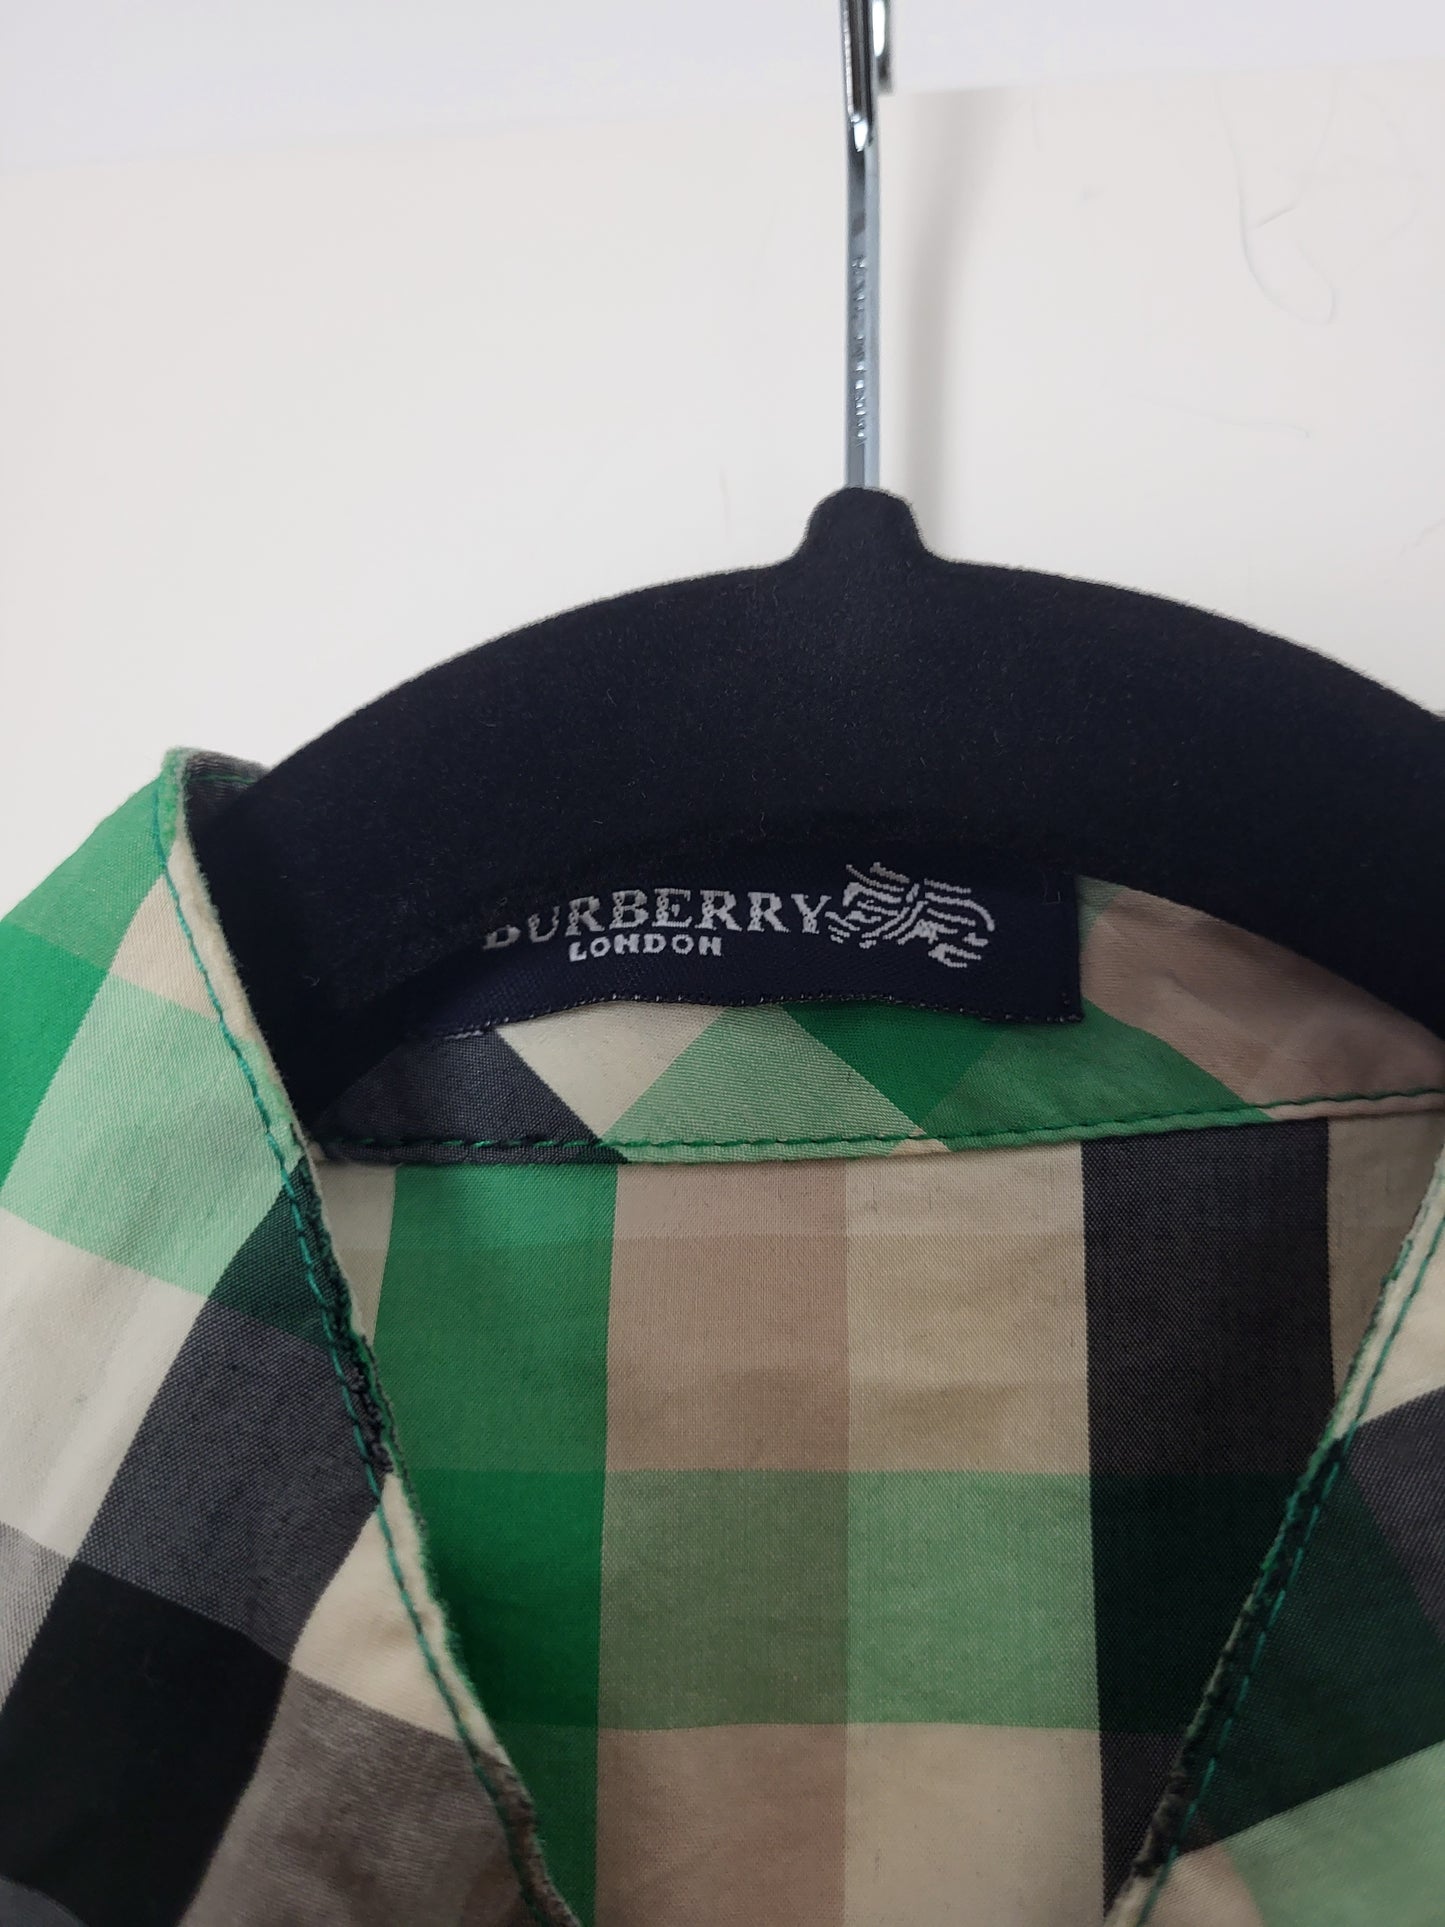 Burberry - Bluse/Hemd - Karo Muster - Vintage - Grün - Damen - S/M